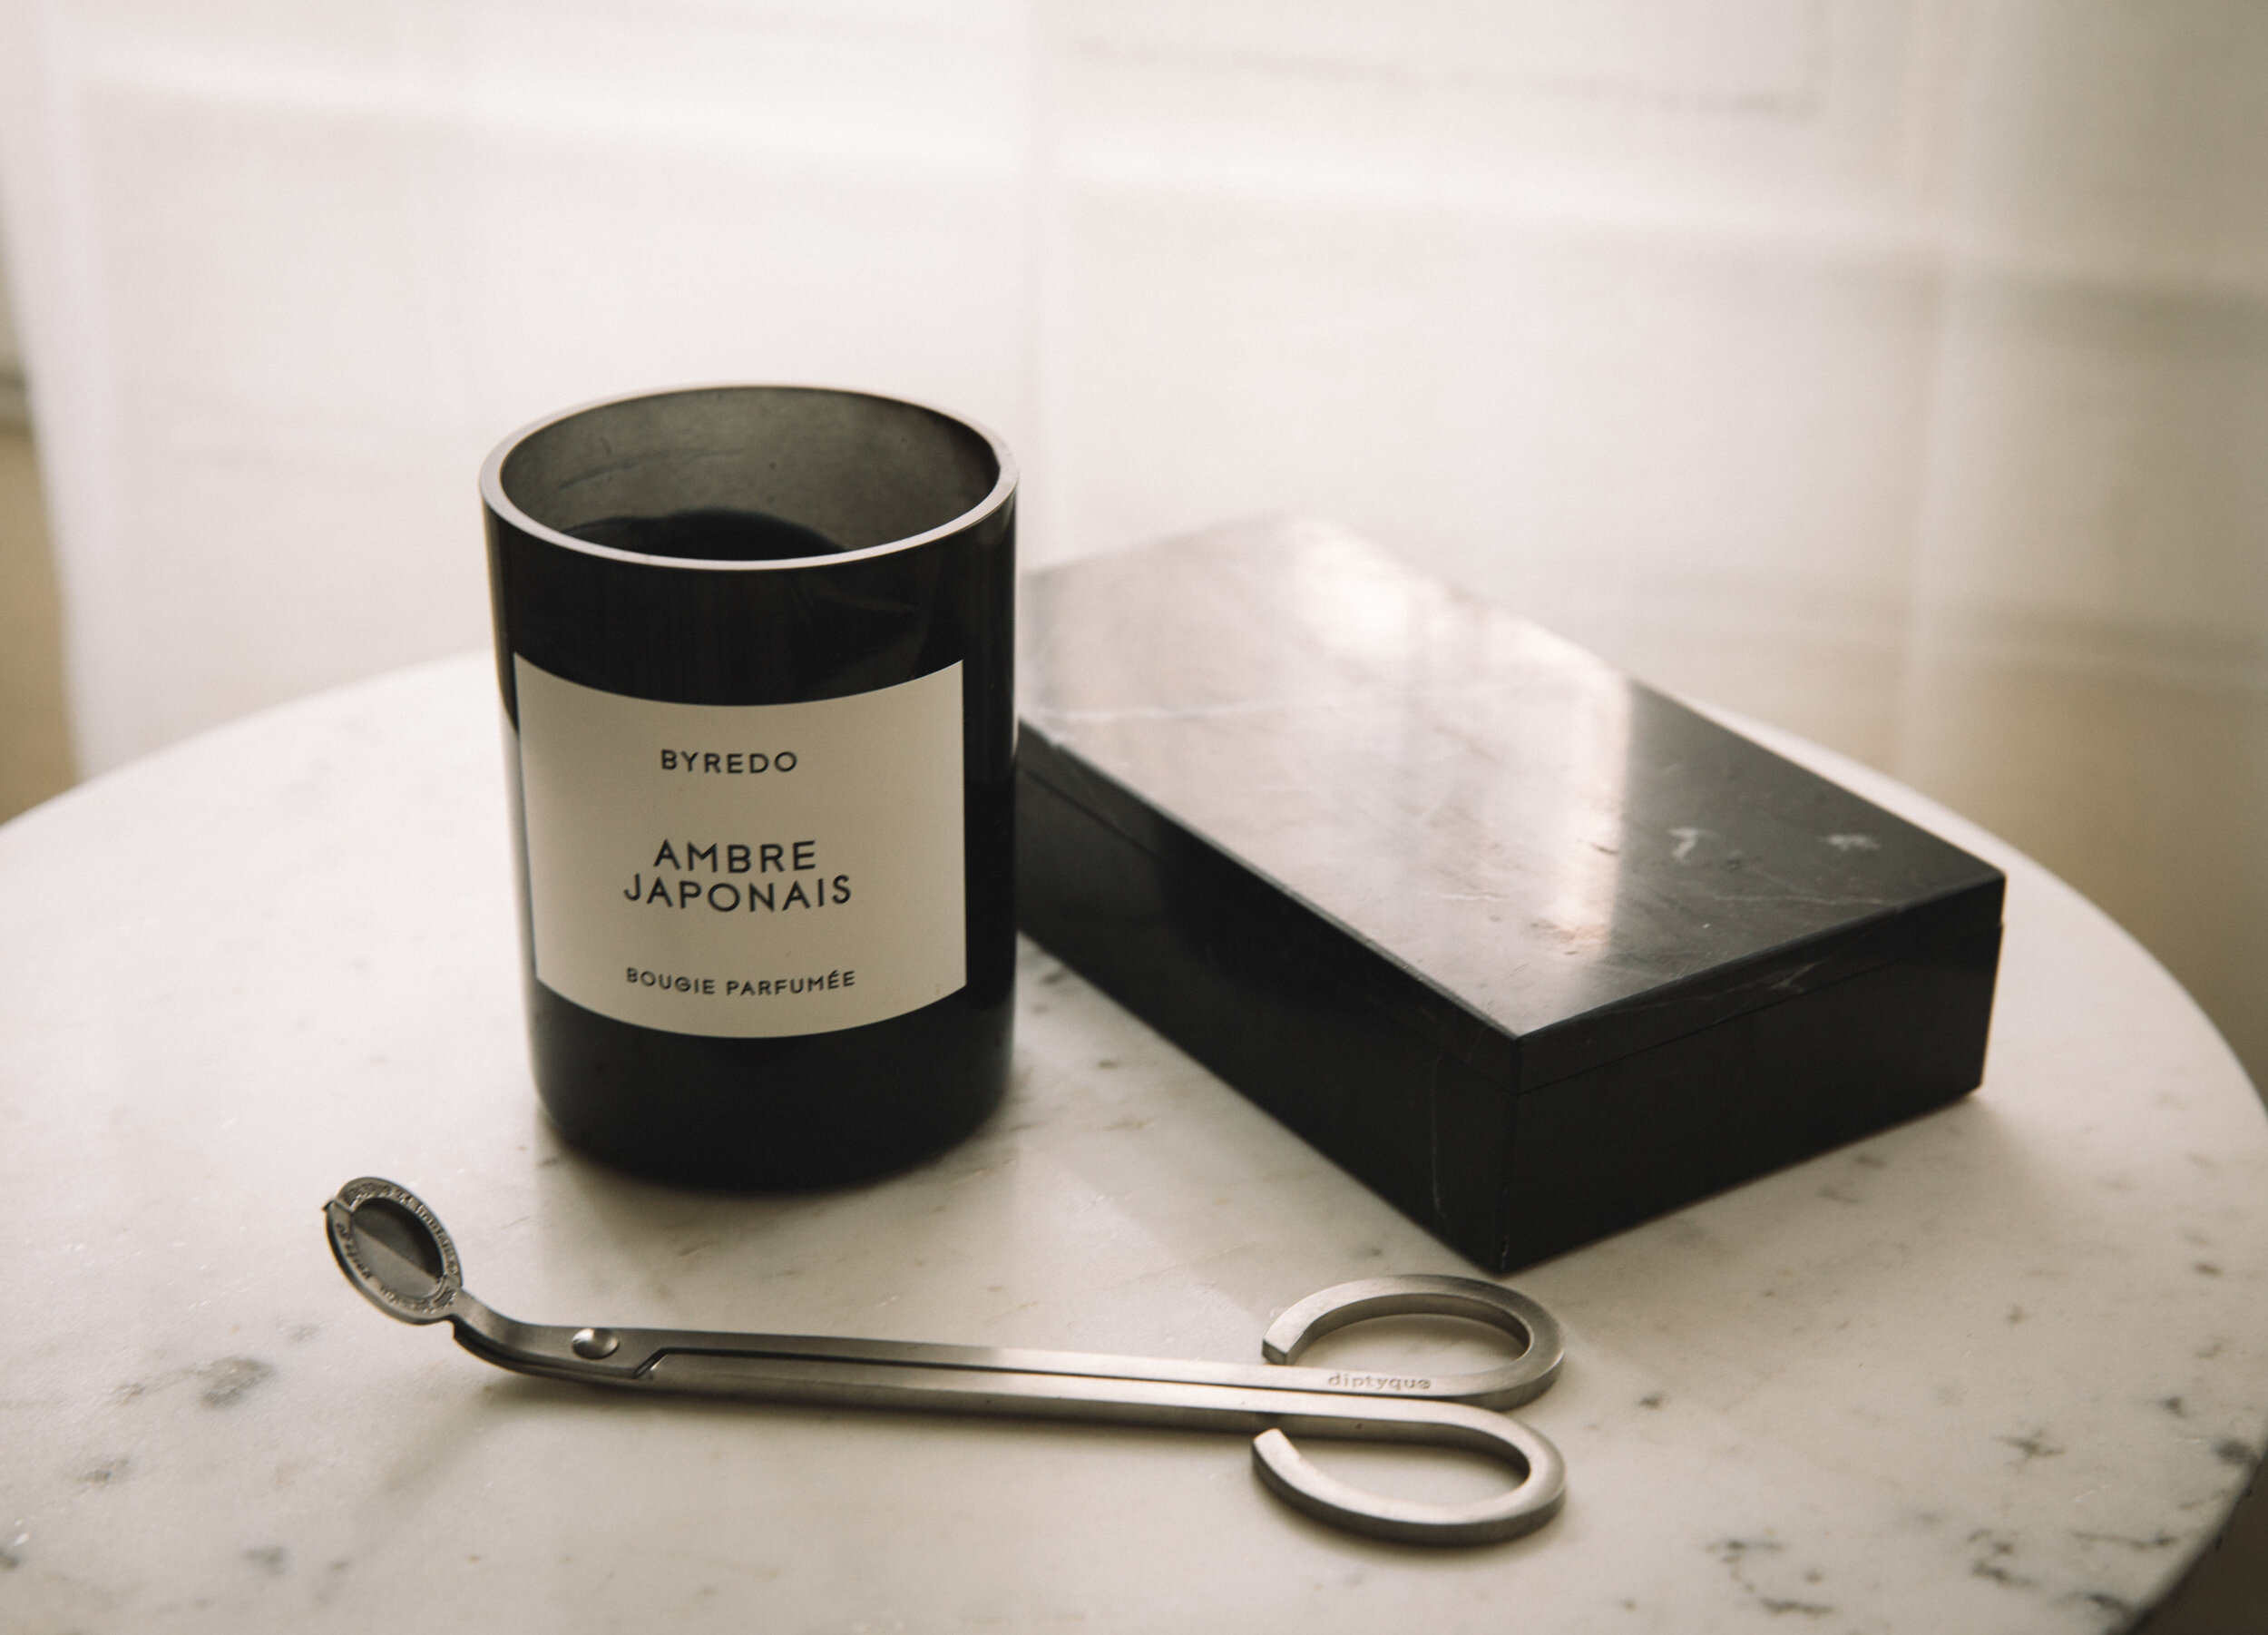 Ambre (Amber) - Classic Candle